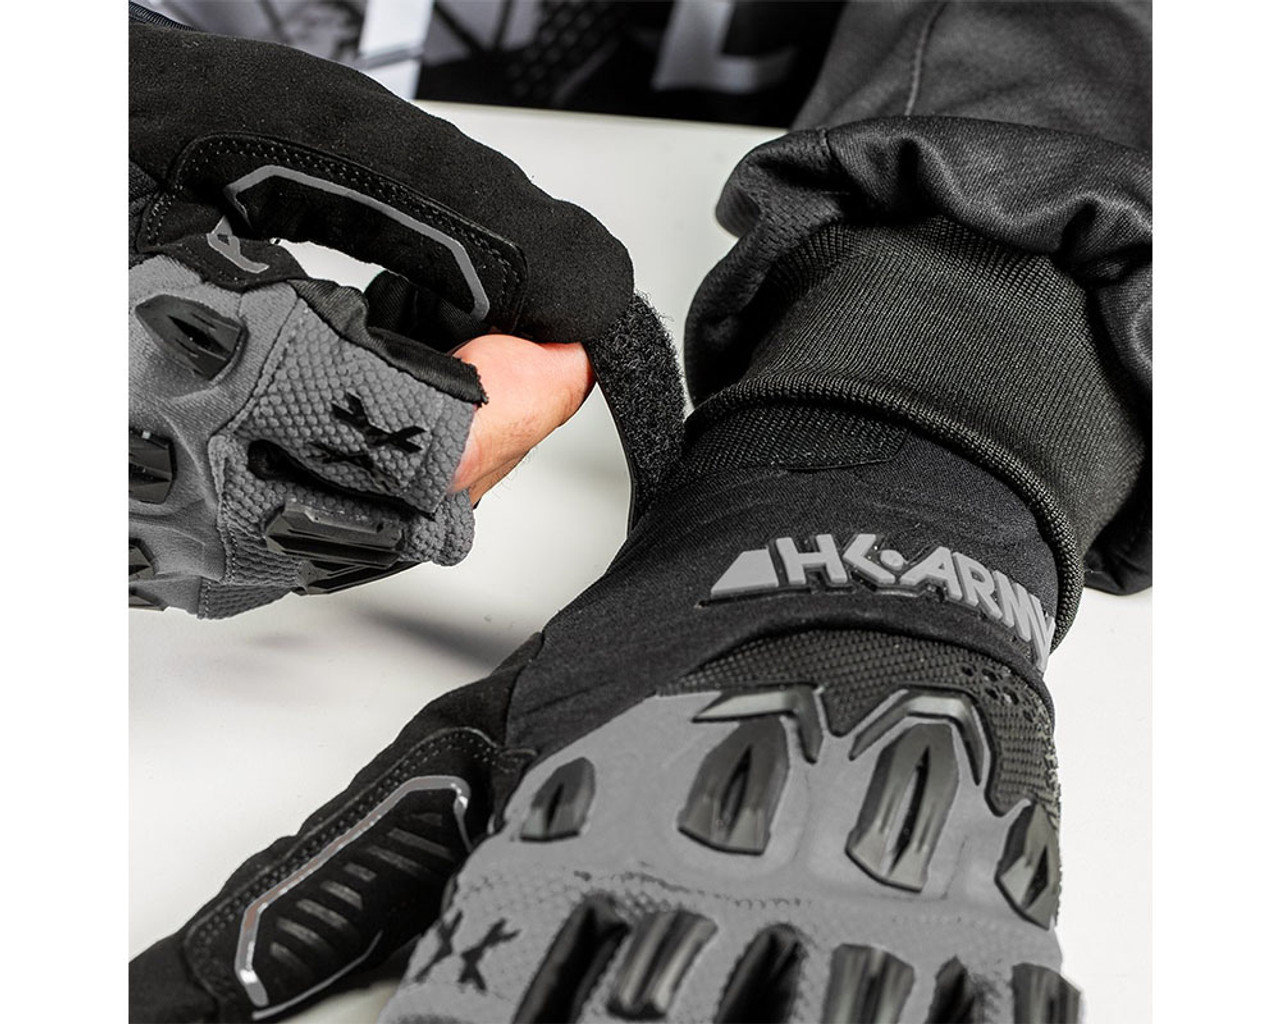 Exalt Paintball Skeleton Hand Death Grip Padded Gloves Black Small